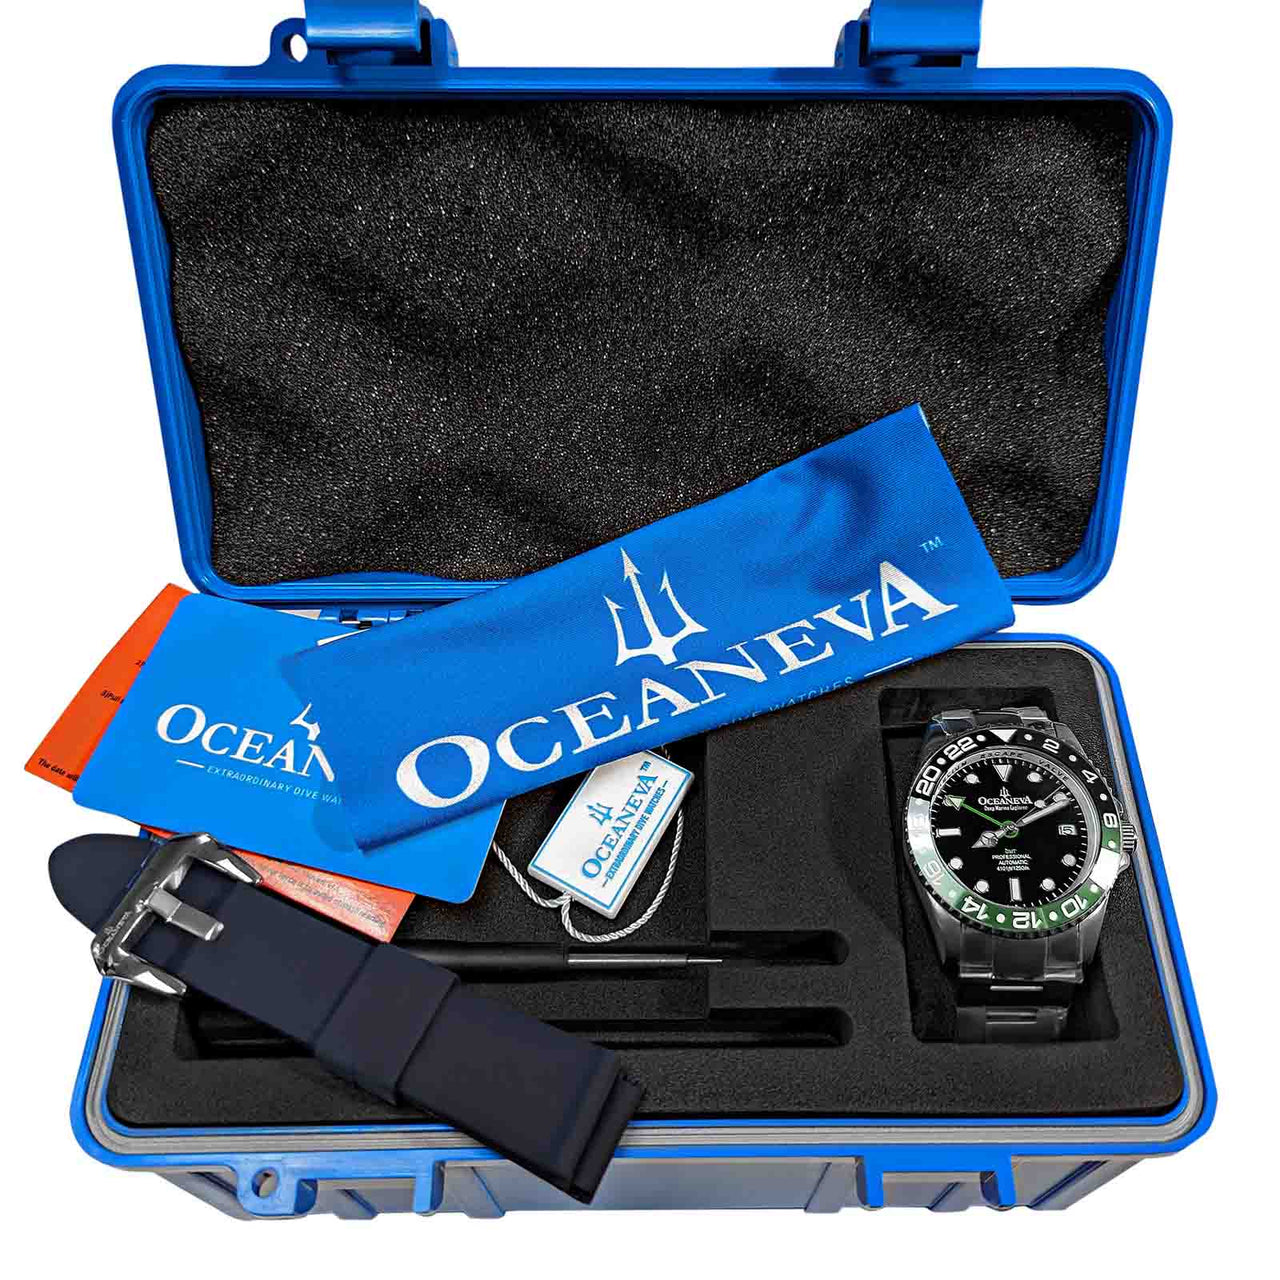 Oceaneva Titanium Automatic Watch beside its Waterproof & Dust-Proof Blue Case